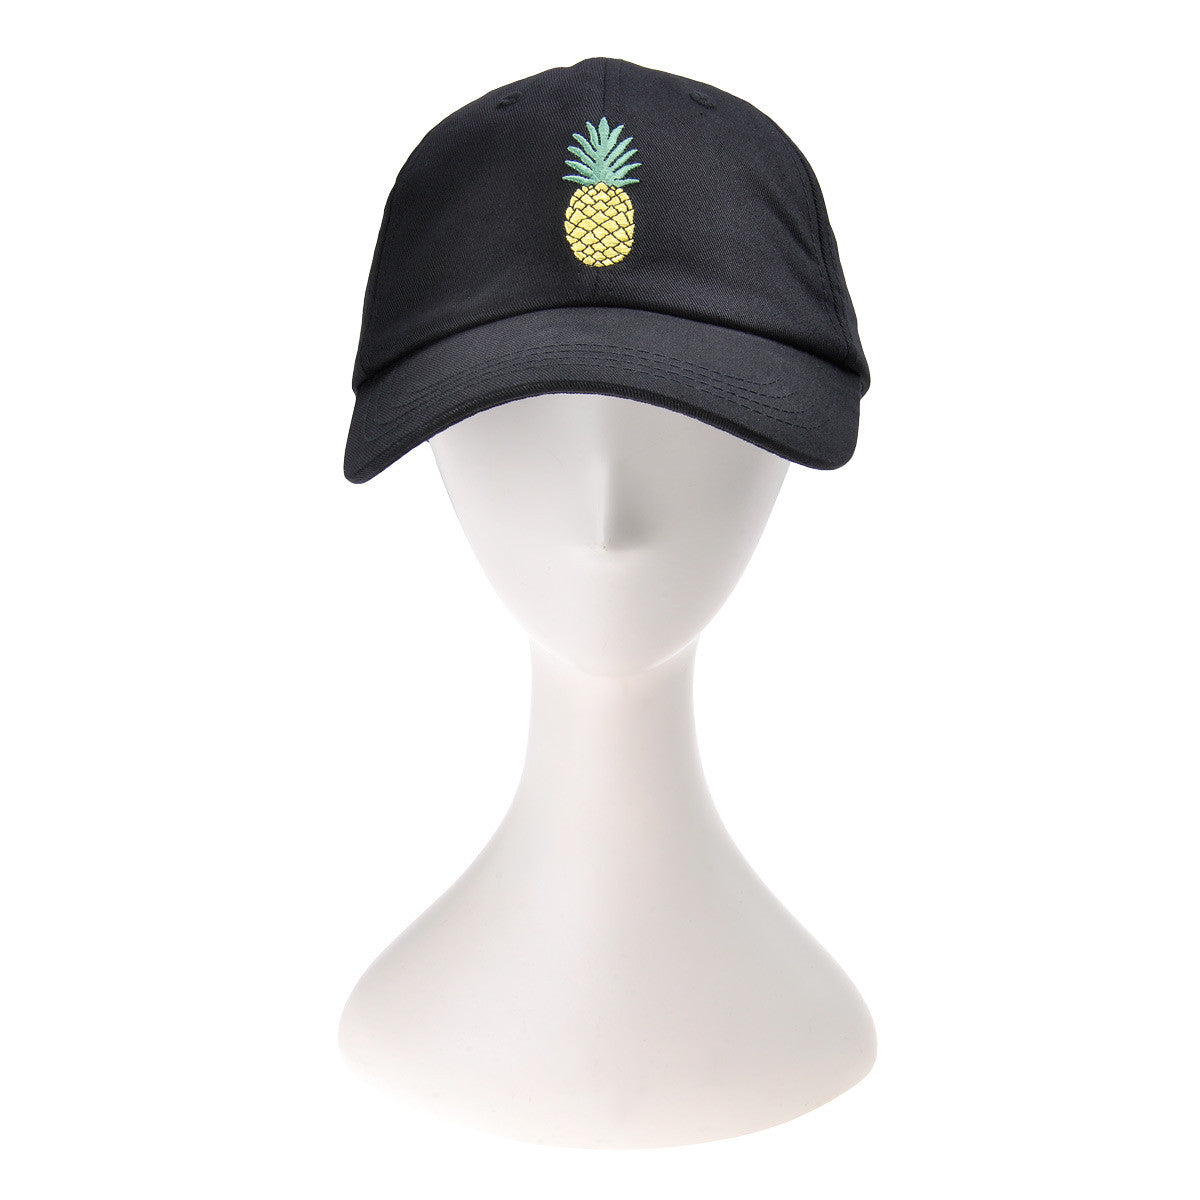 Baseball Cap Adjustable Cotton Hat Fashion Embroidered for Men Women Boys Girls